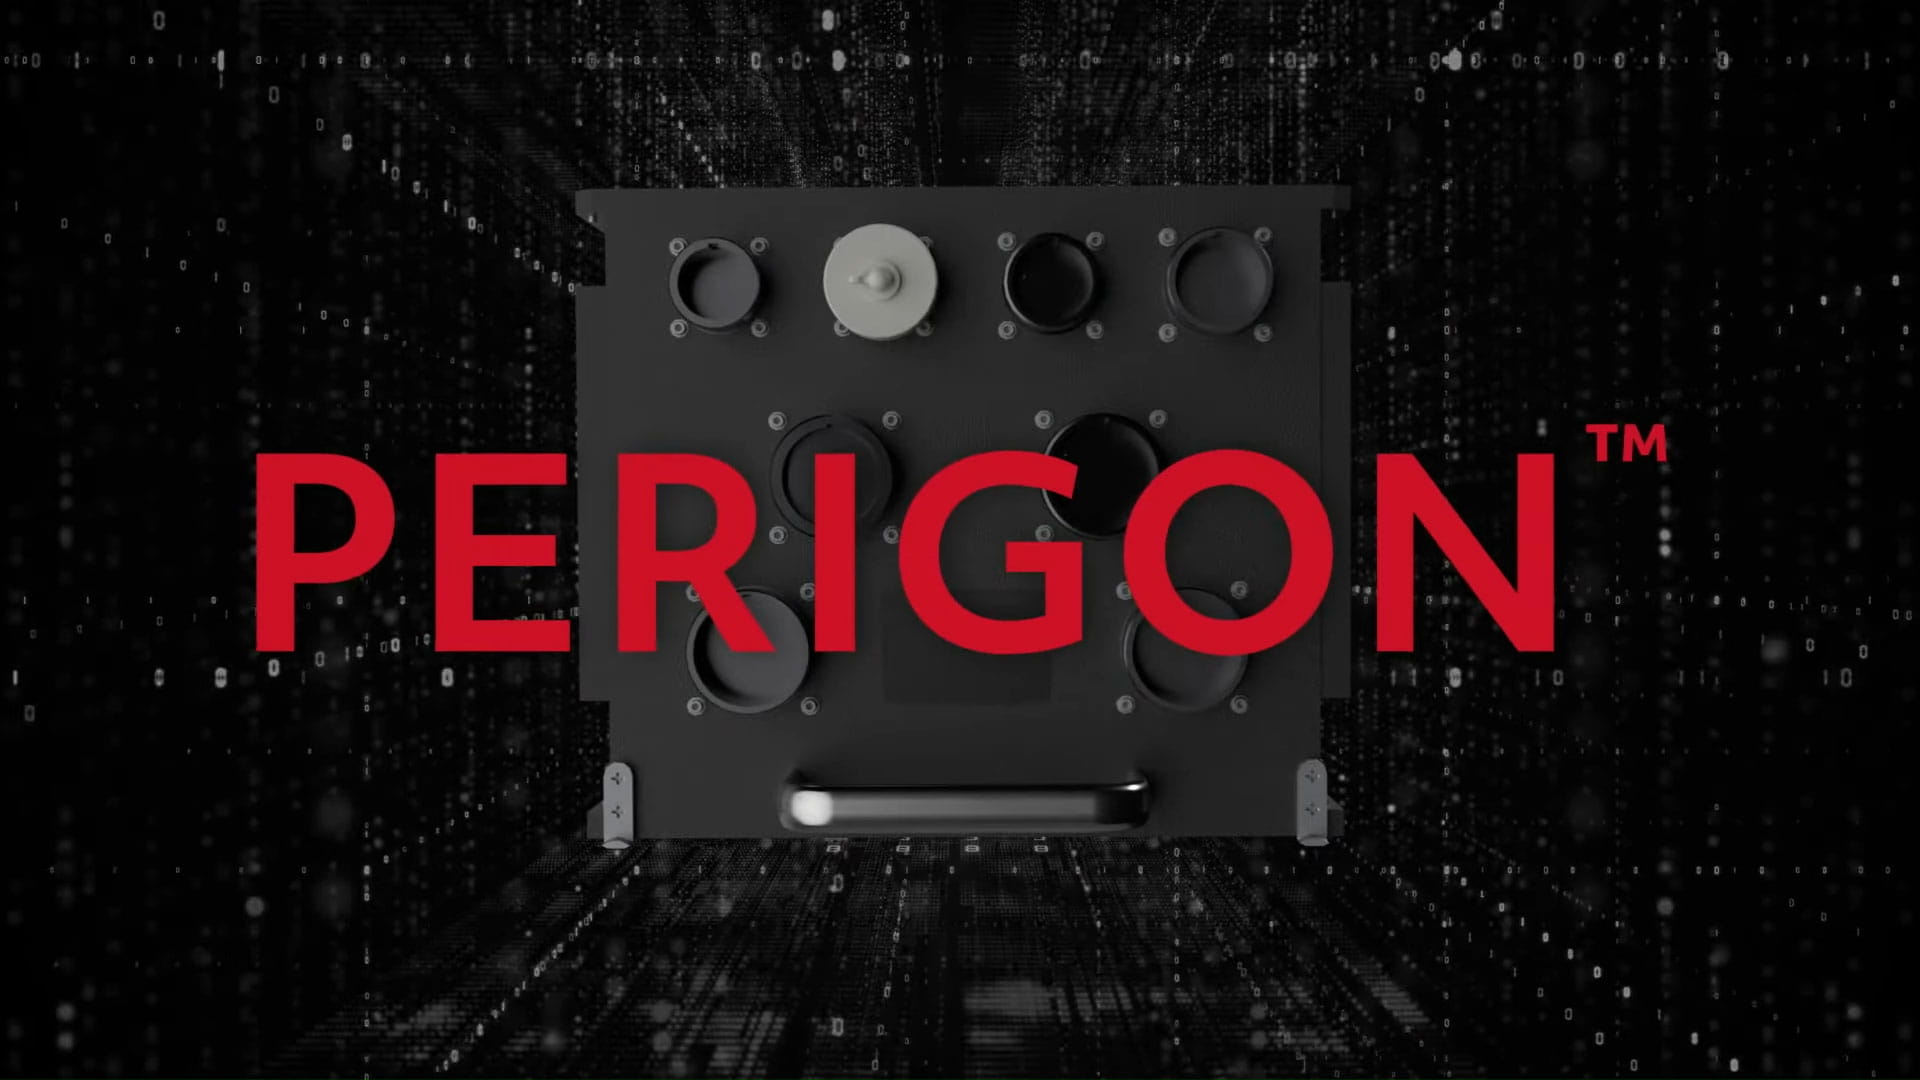 Perigon vehicle management computer with the text 'Perigon' overlaid